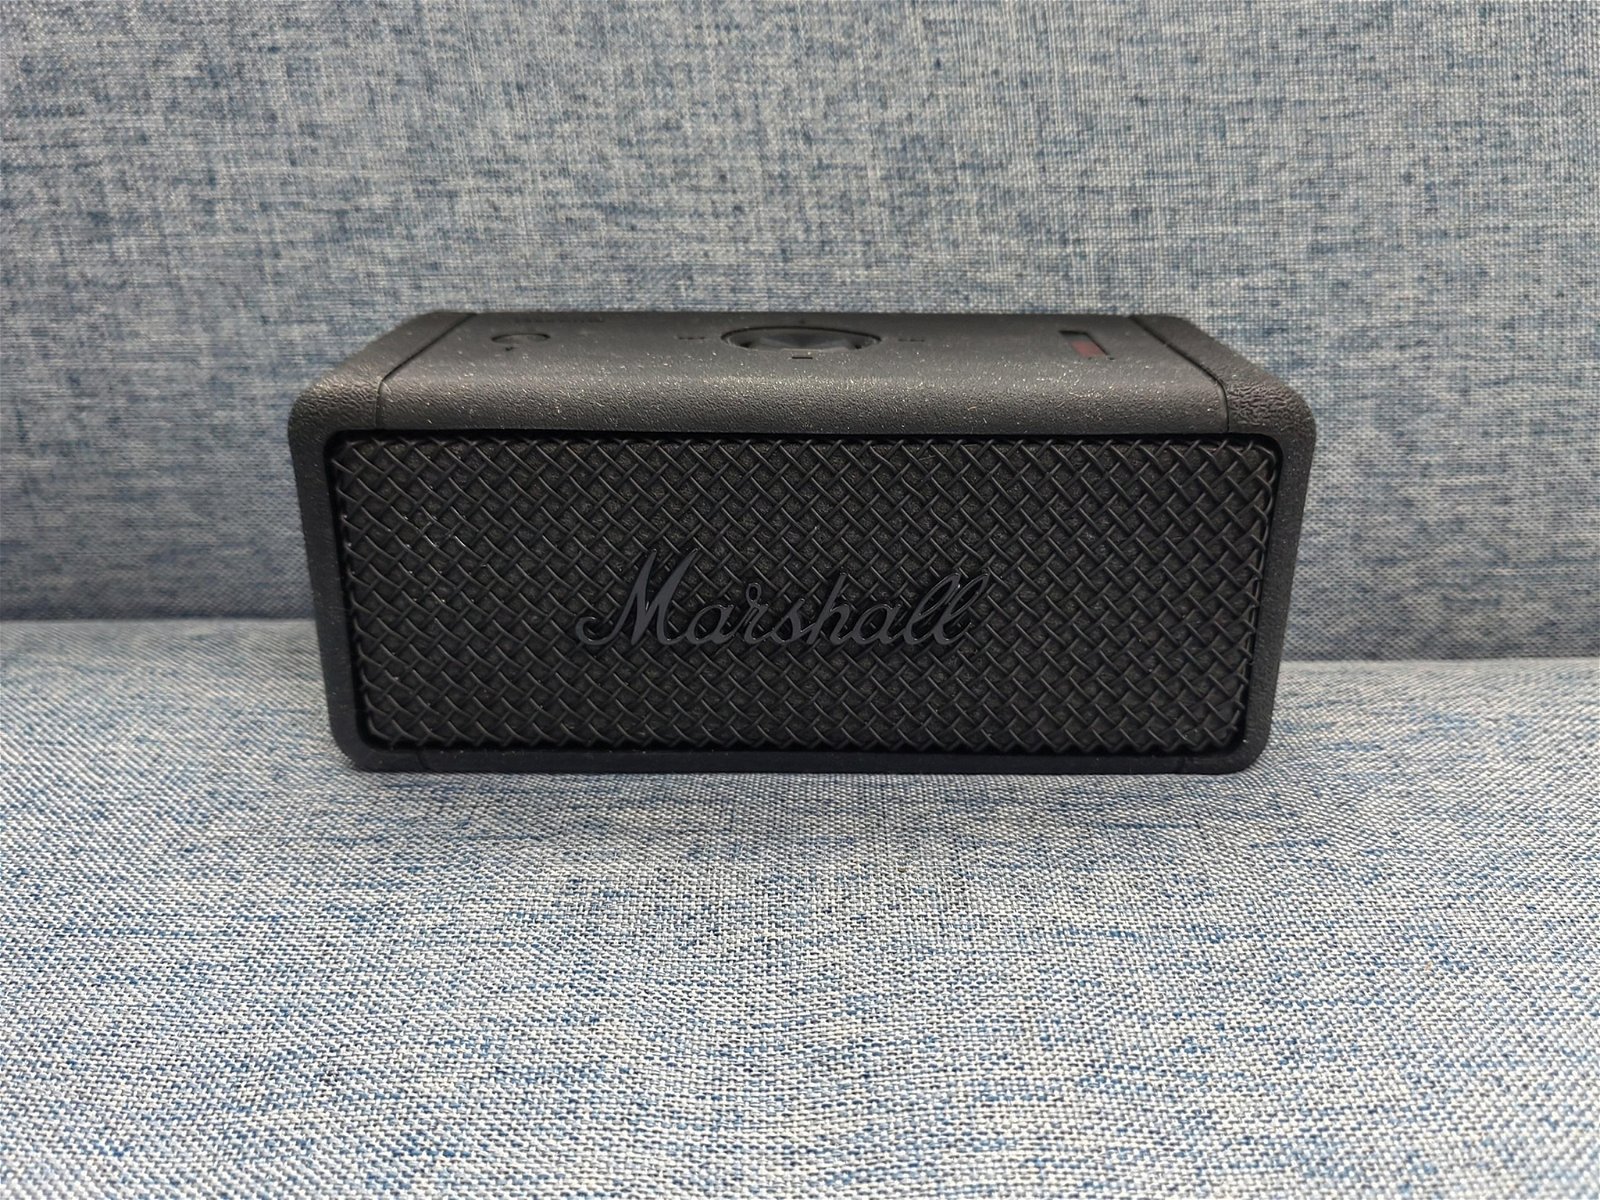 Marshall (60 years of Loud) 2